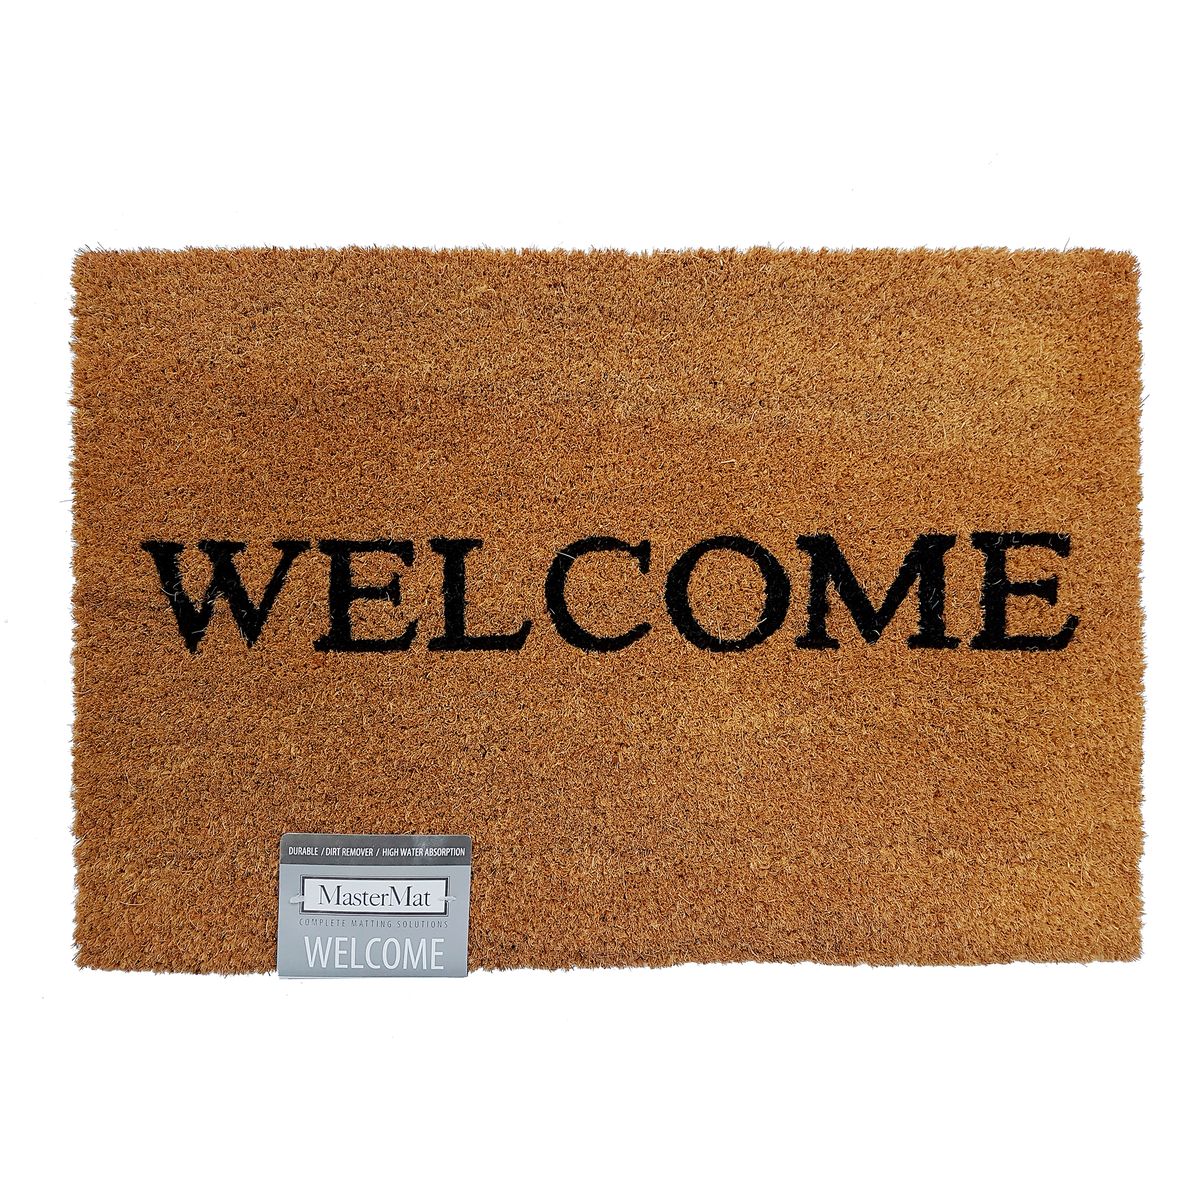 MasterMat Welcome Coir Doormat 100% Natural Coir & PVC Backing ...